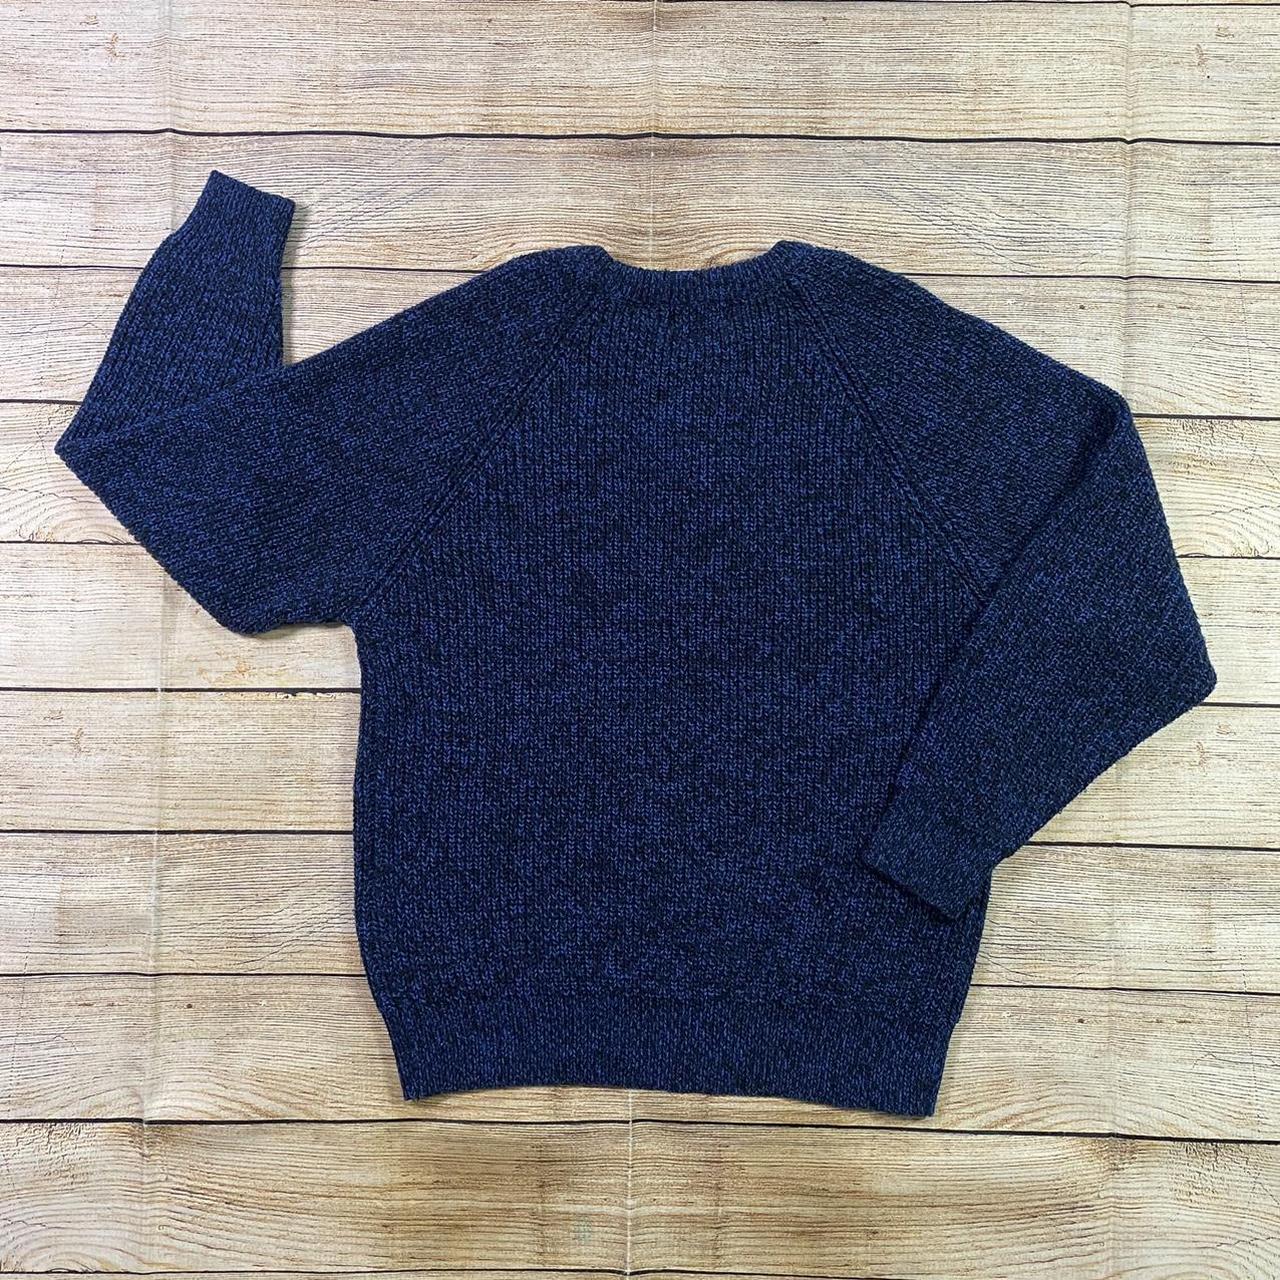 Vintage 1980’s M. McMullin knitted Crewneck sweater... - Depop